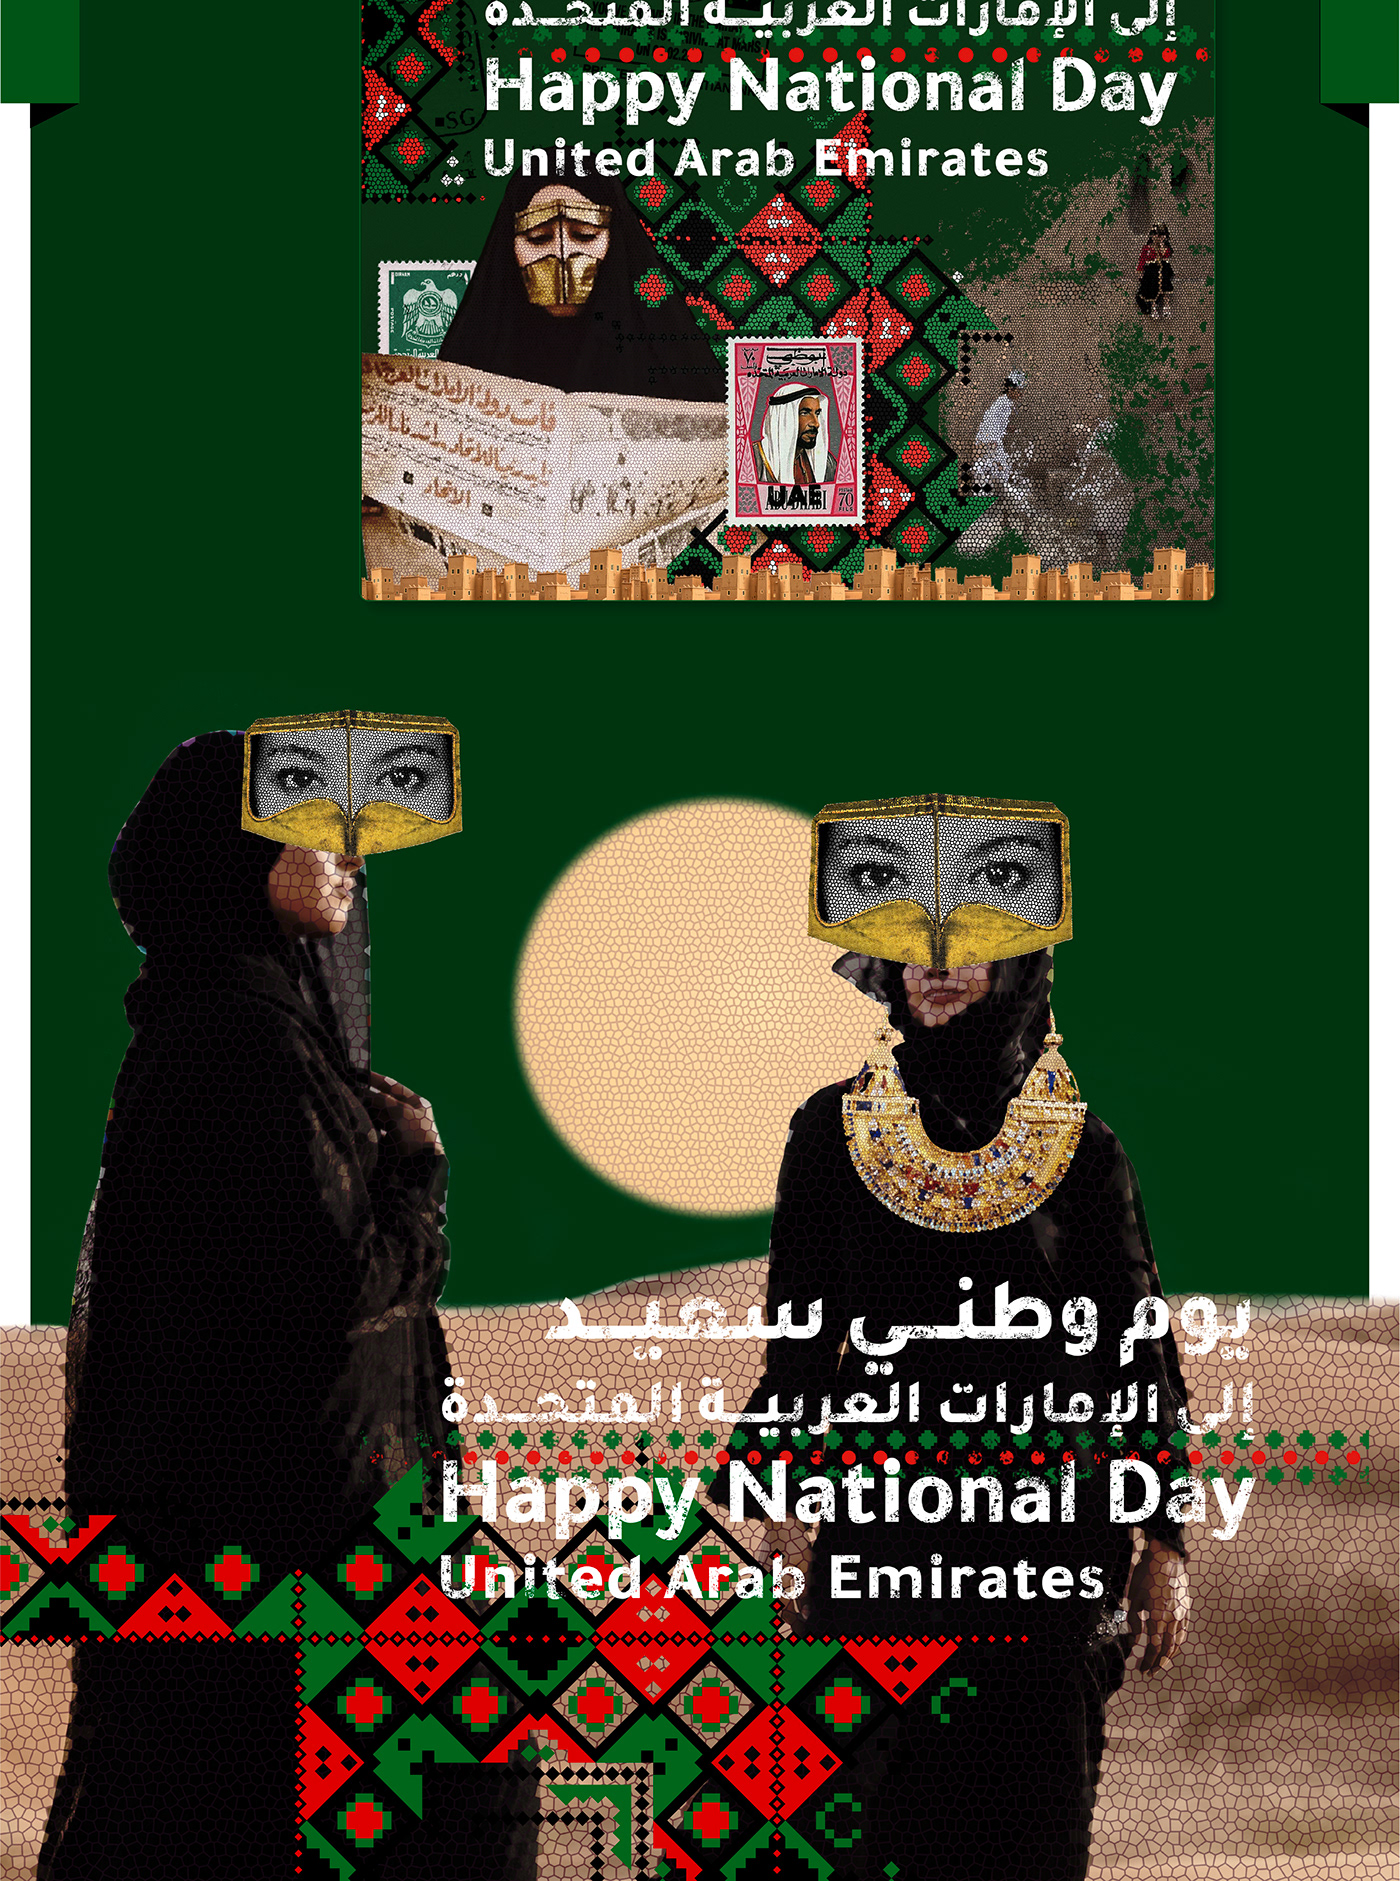 UAE National Day dubai UAE art grid smartphone honor Technology campaign Socialmedia